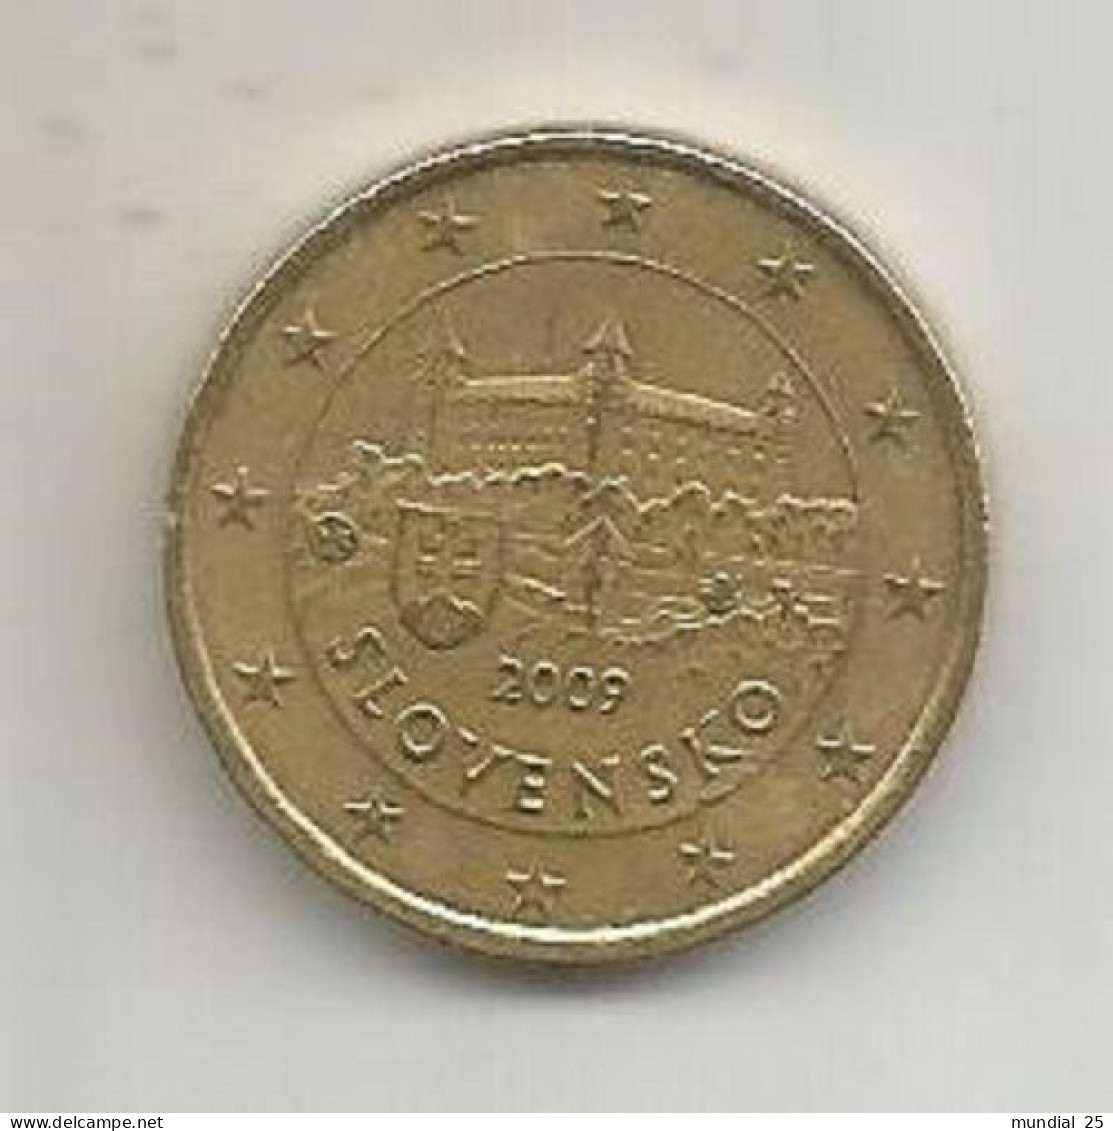 SLOVAKIA 50 EURO CENT 2009 - Slowakei